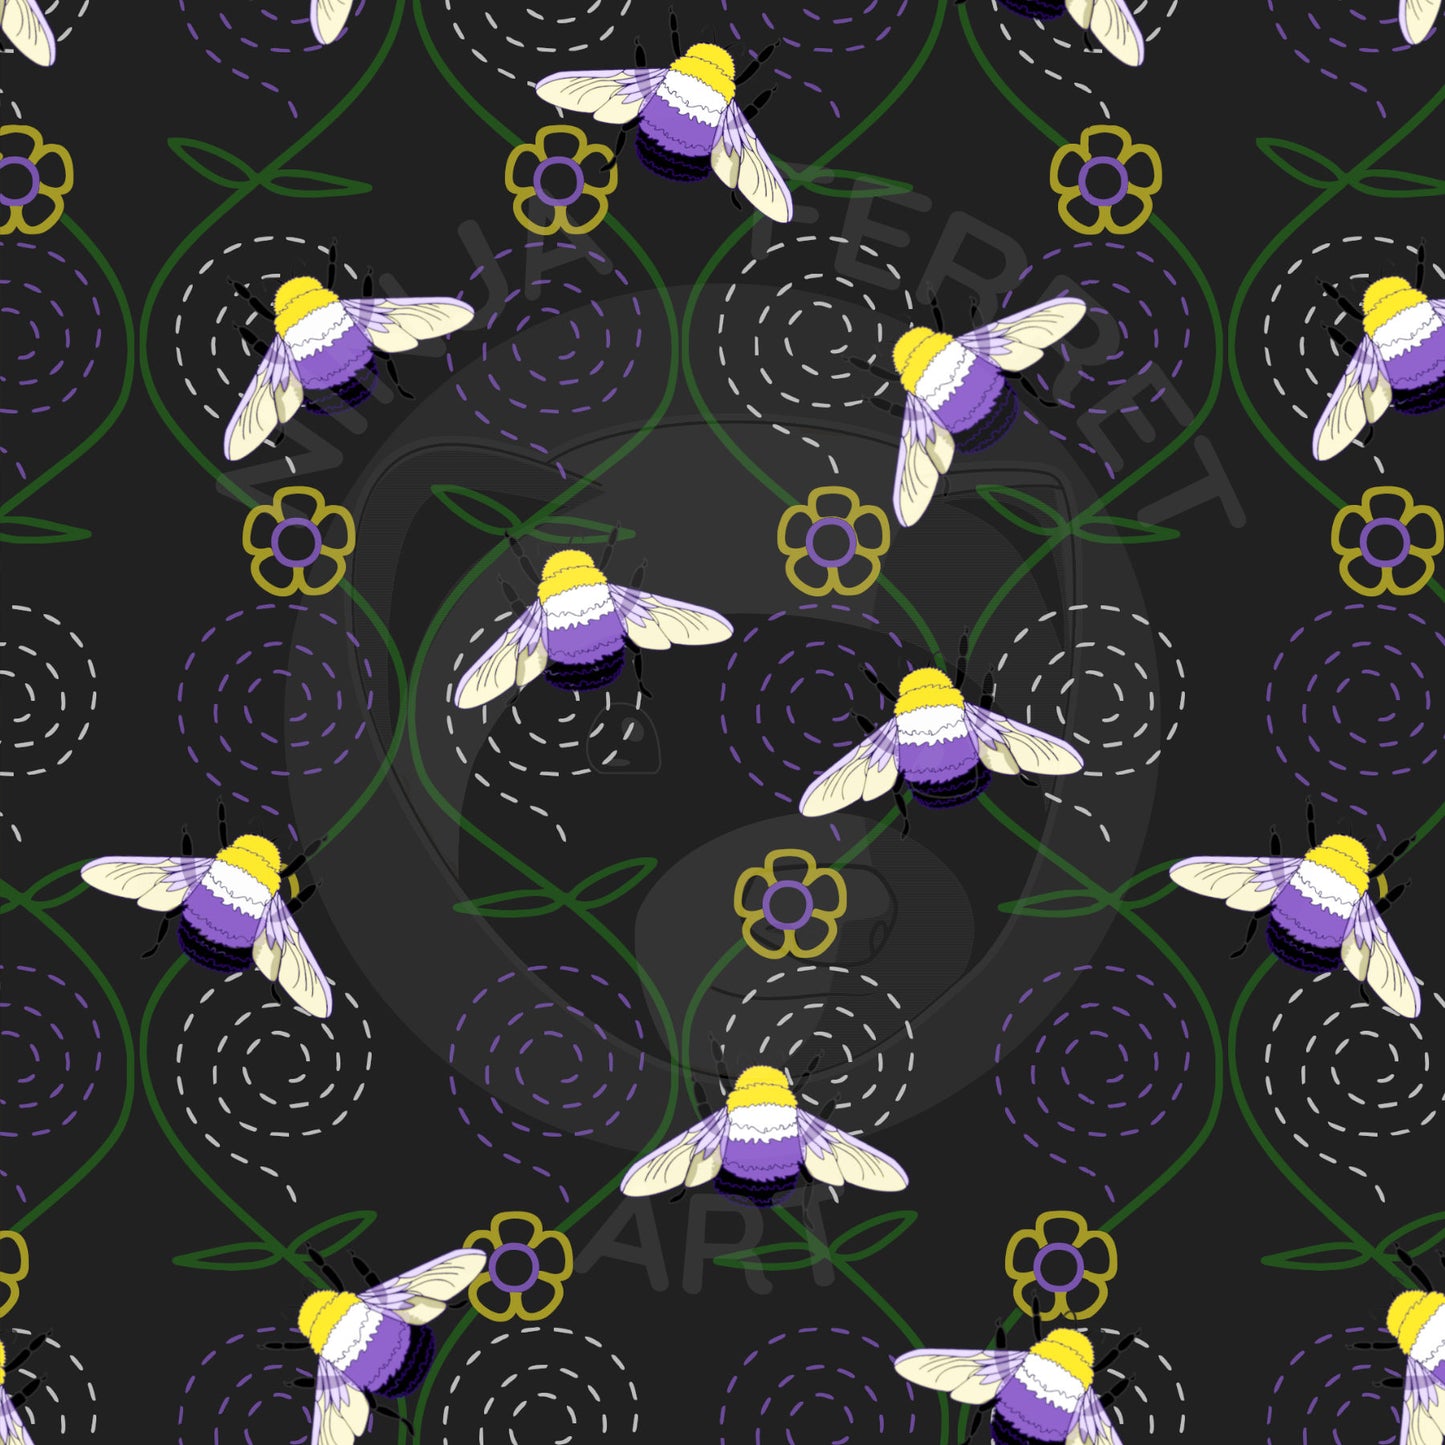 Sample swatch bumblebee and vine trellis pattern.